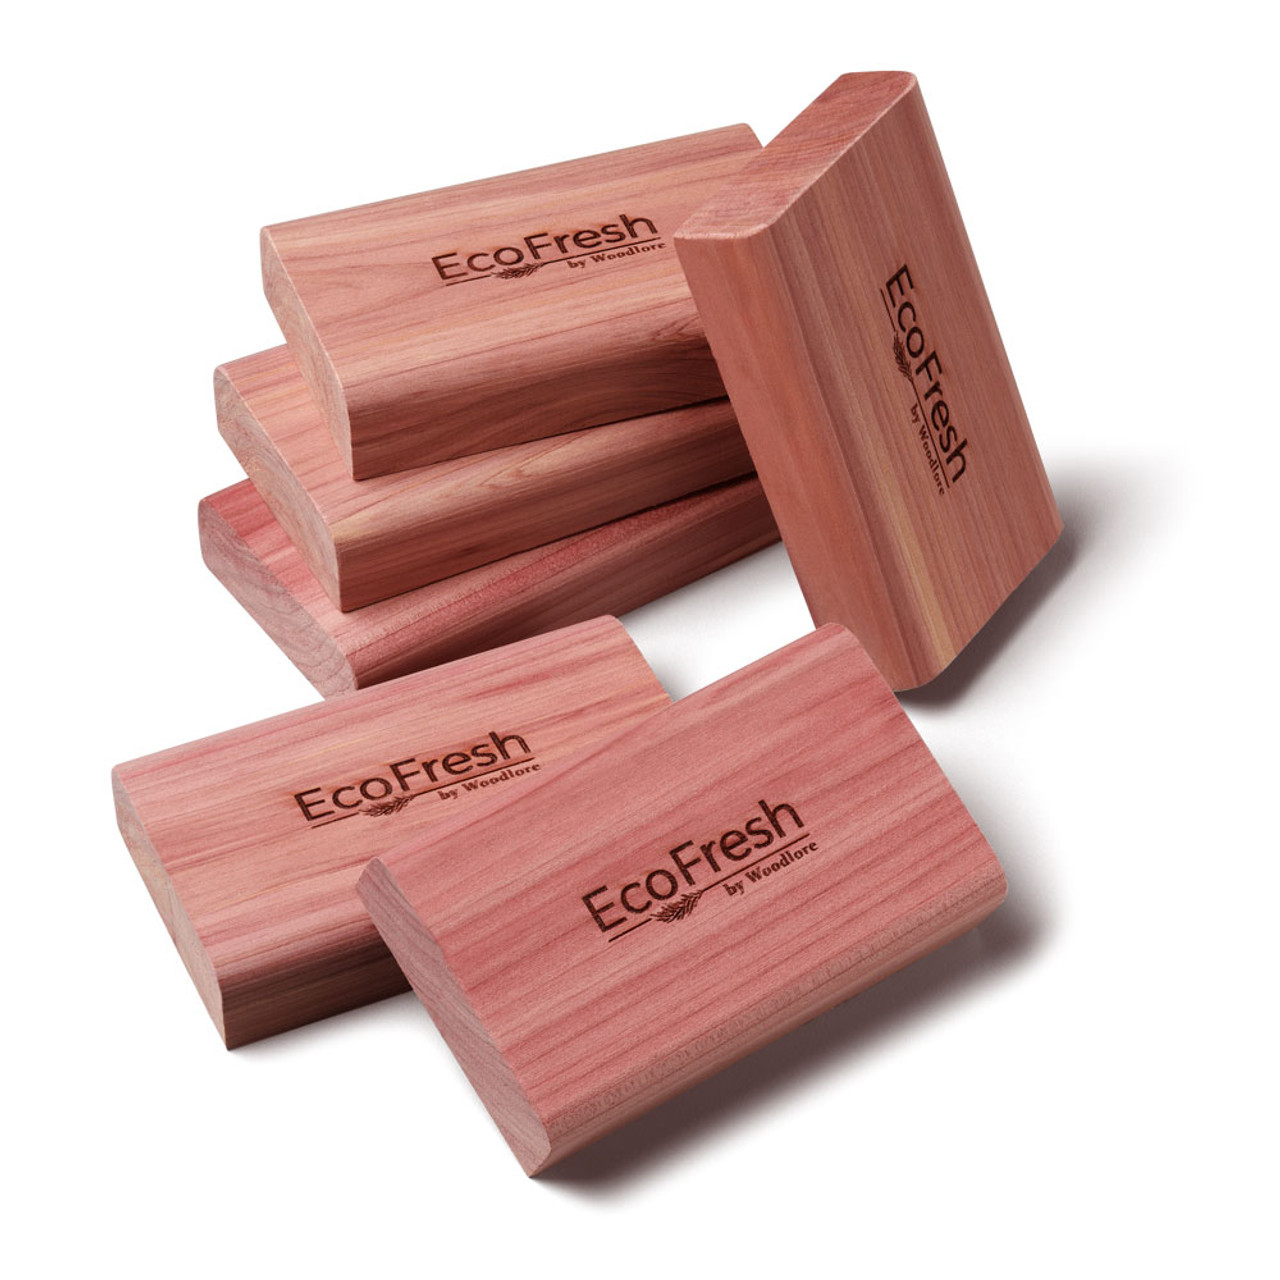 EcoFresh Premium Aromatic Cedar Blocks (6-pack) - Woodlore Cedar